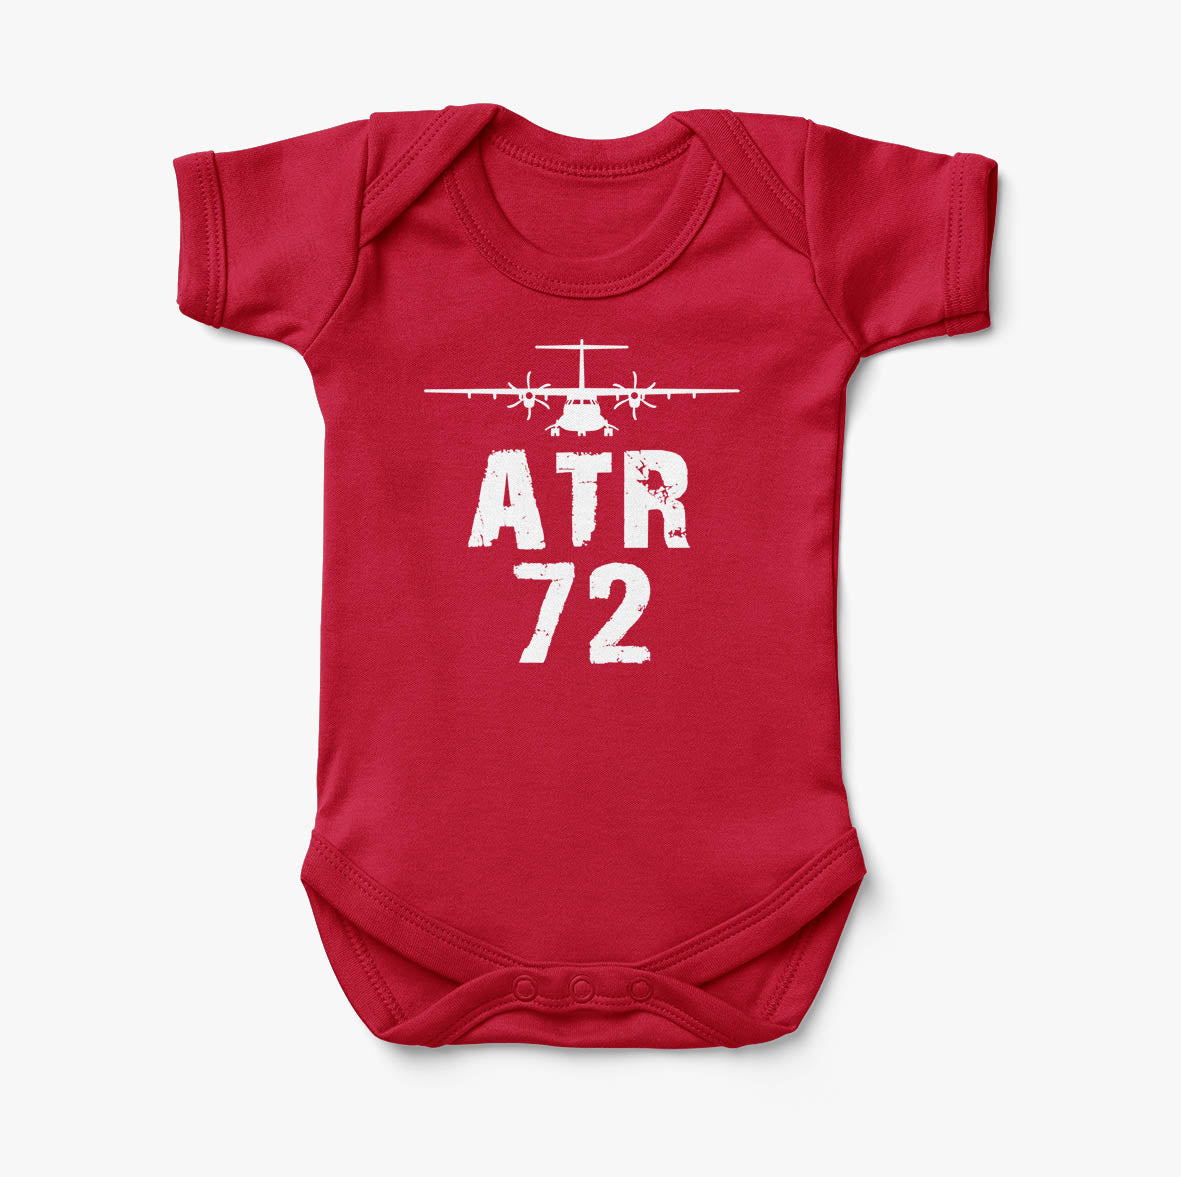 ATR-72 & Plane Designed Baby Bodysuits